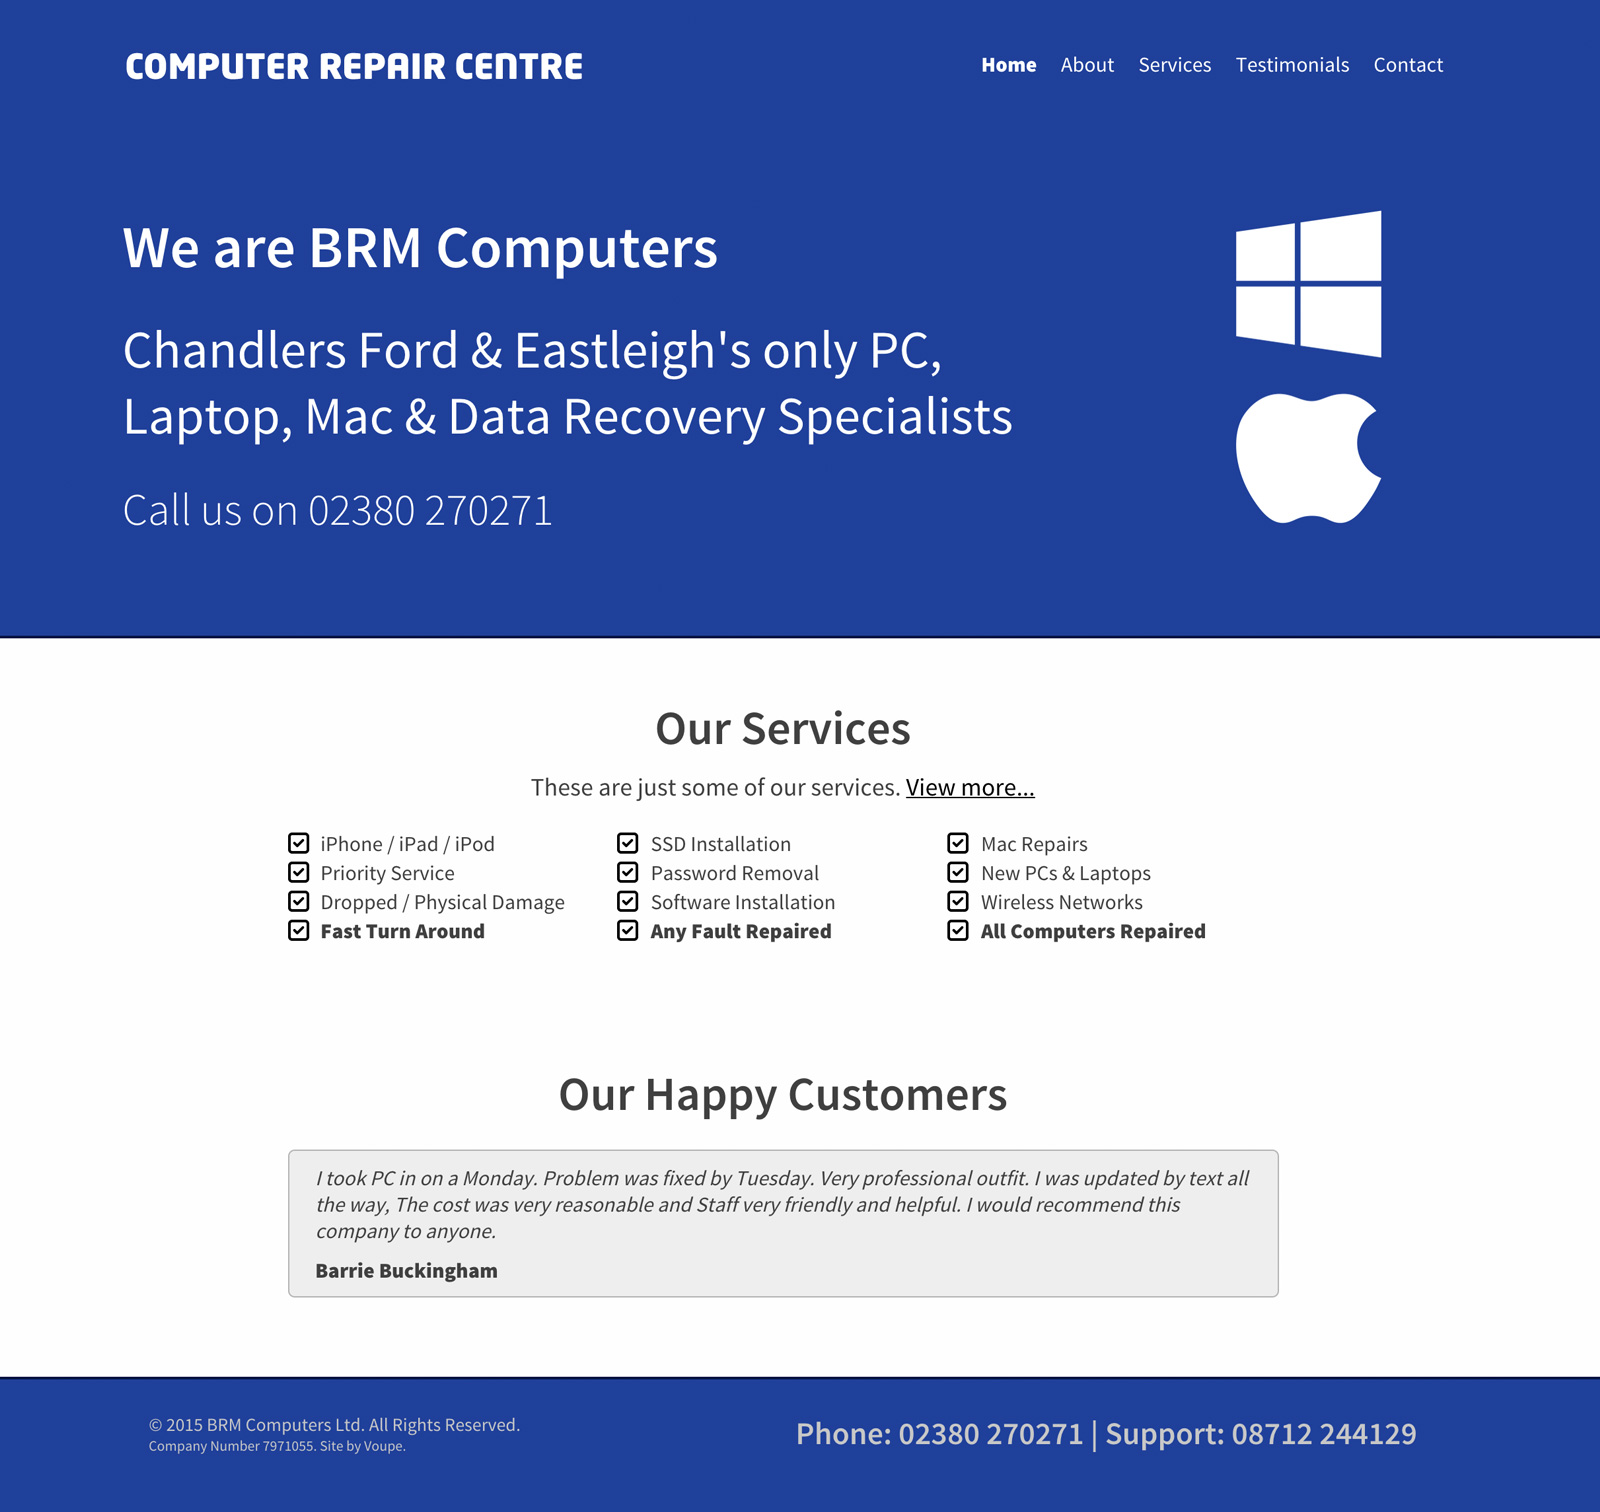 BRM Computers